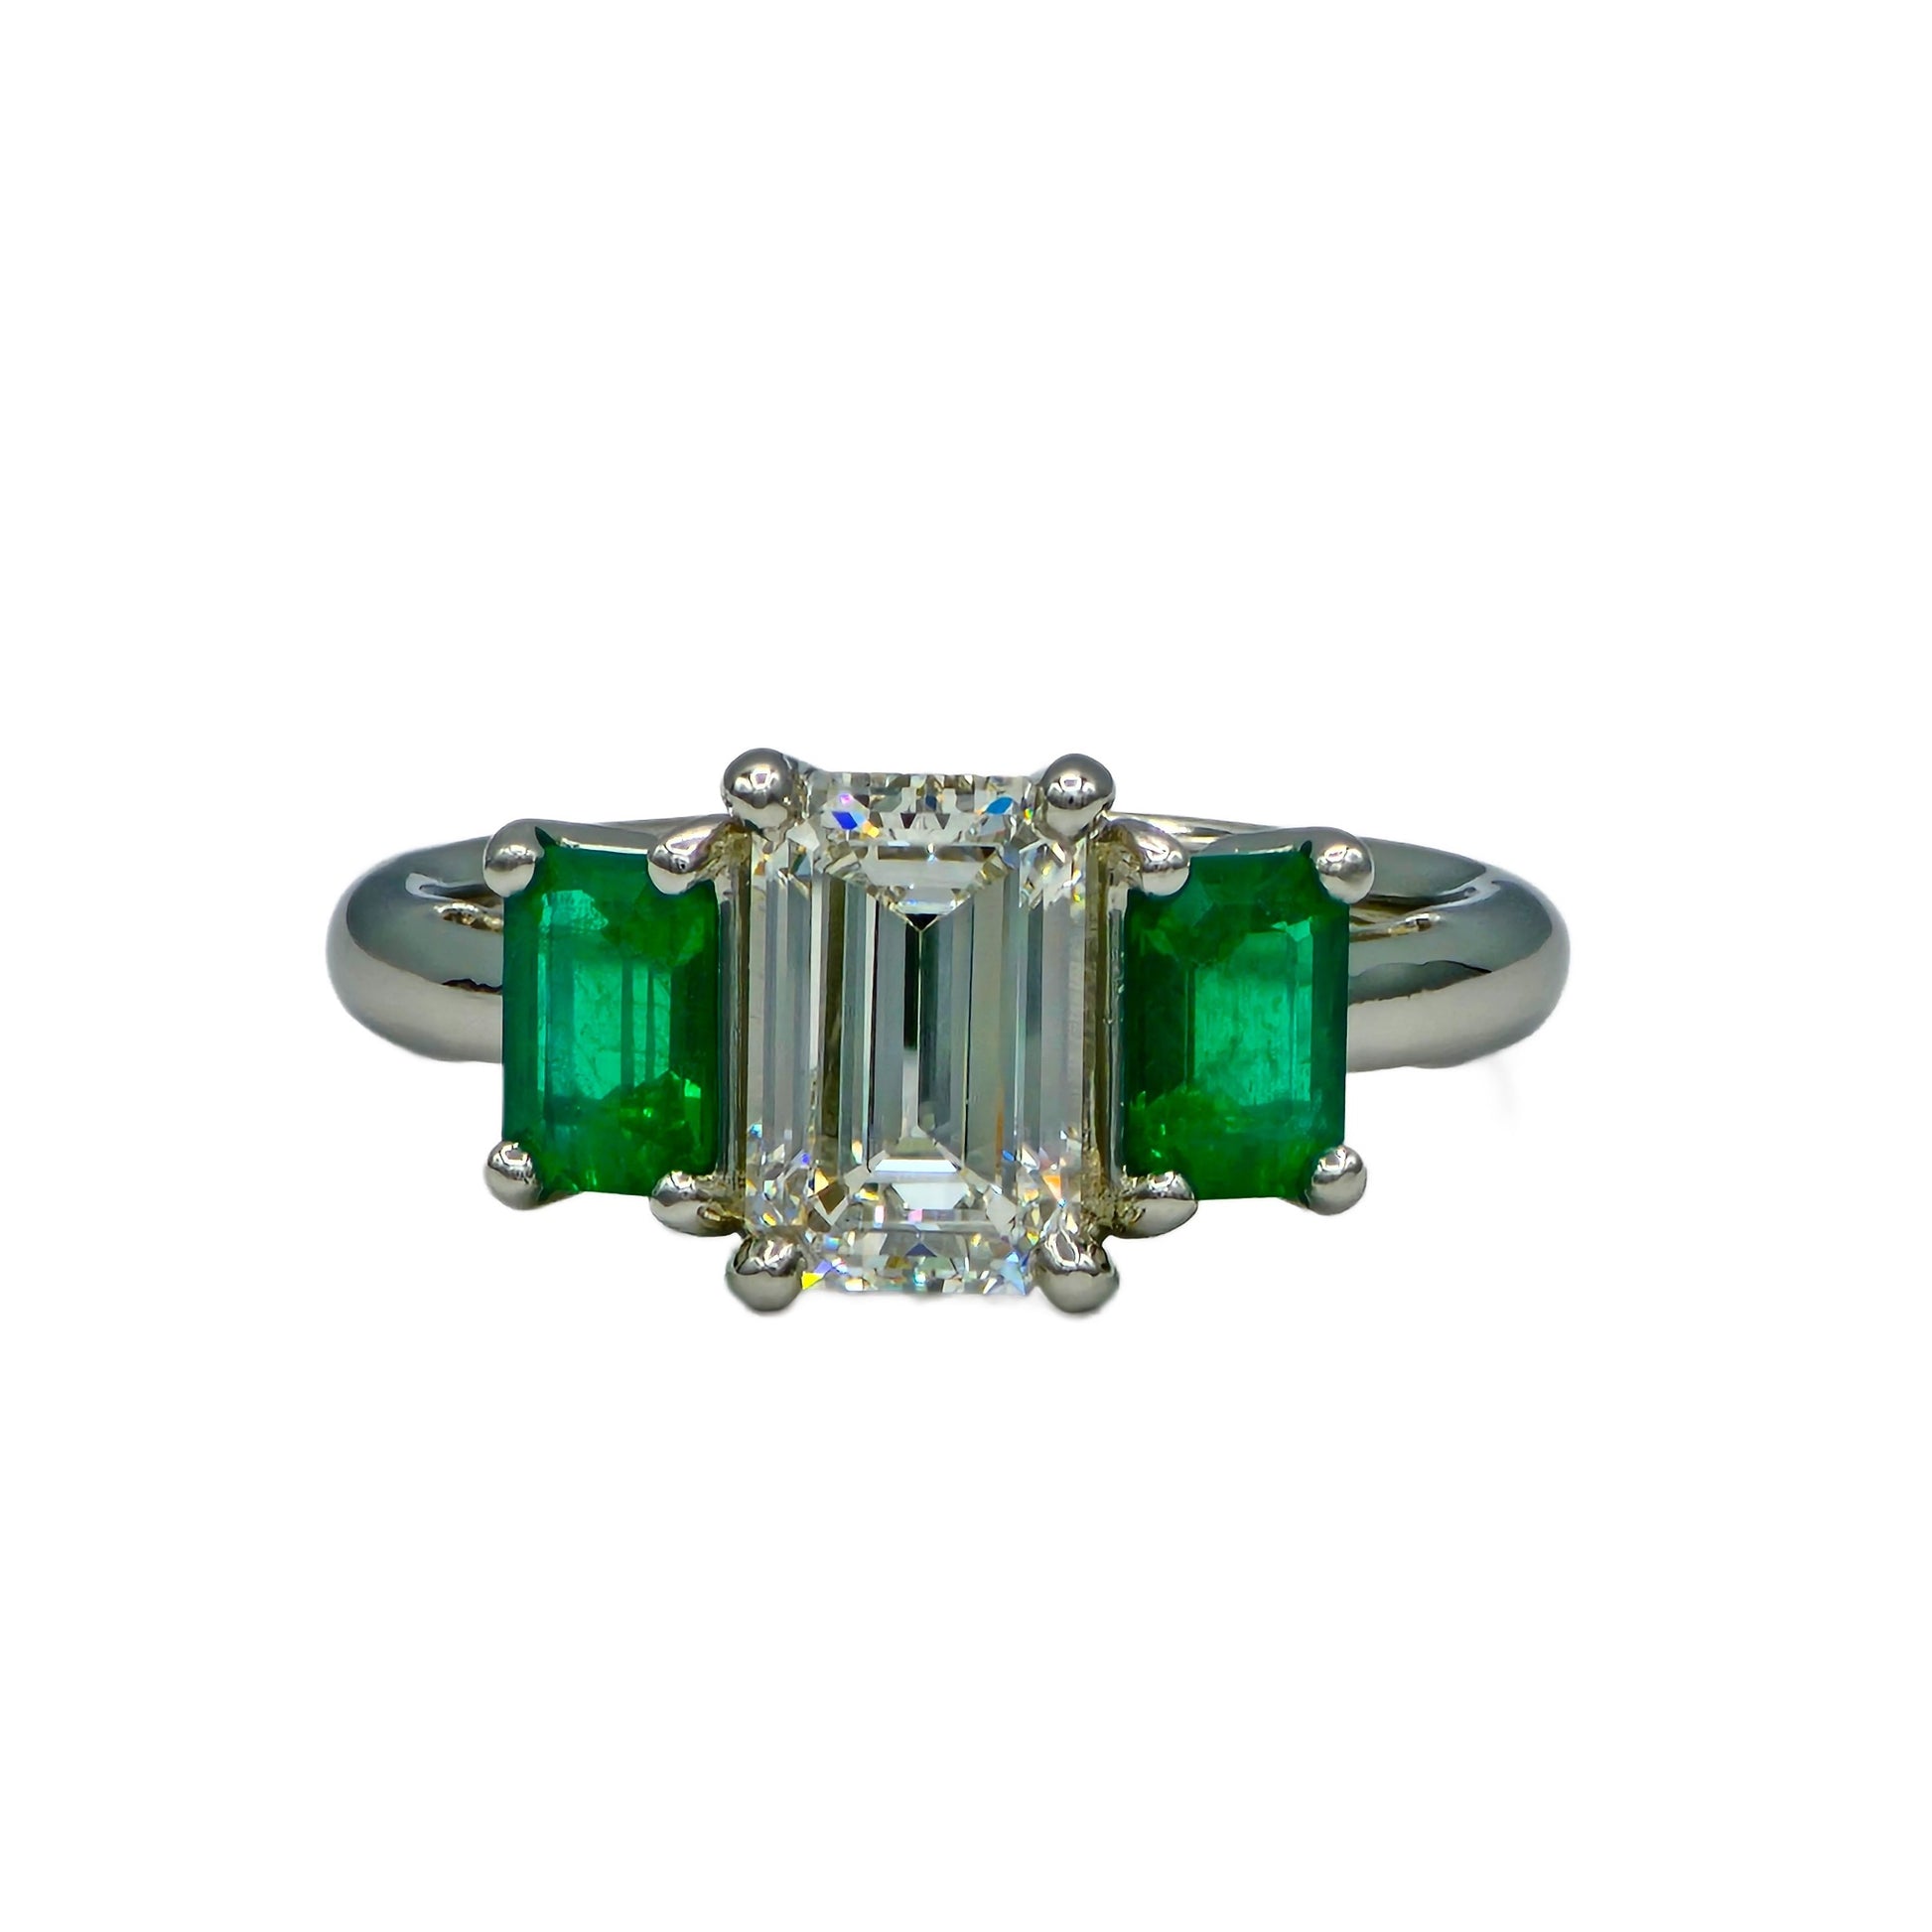 1.74 Carat G/SI1 Emerald Cut Diamond and Emerald Ring in Platinum, GIA Report